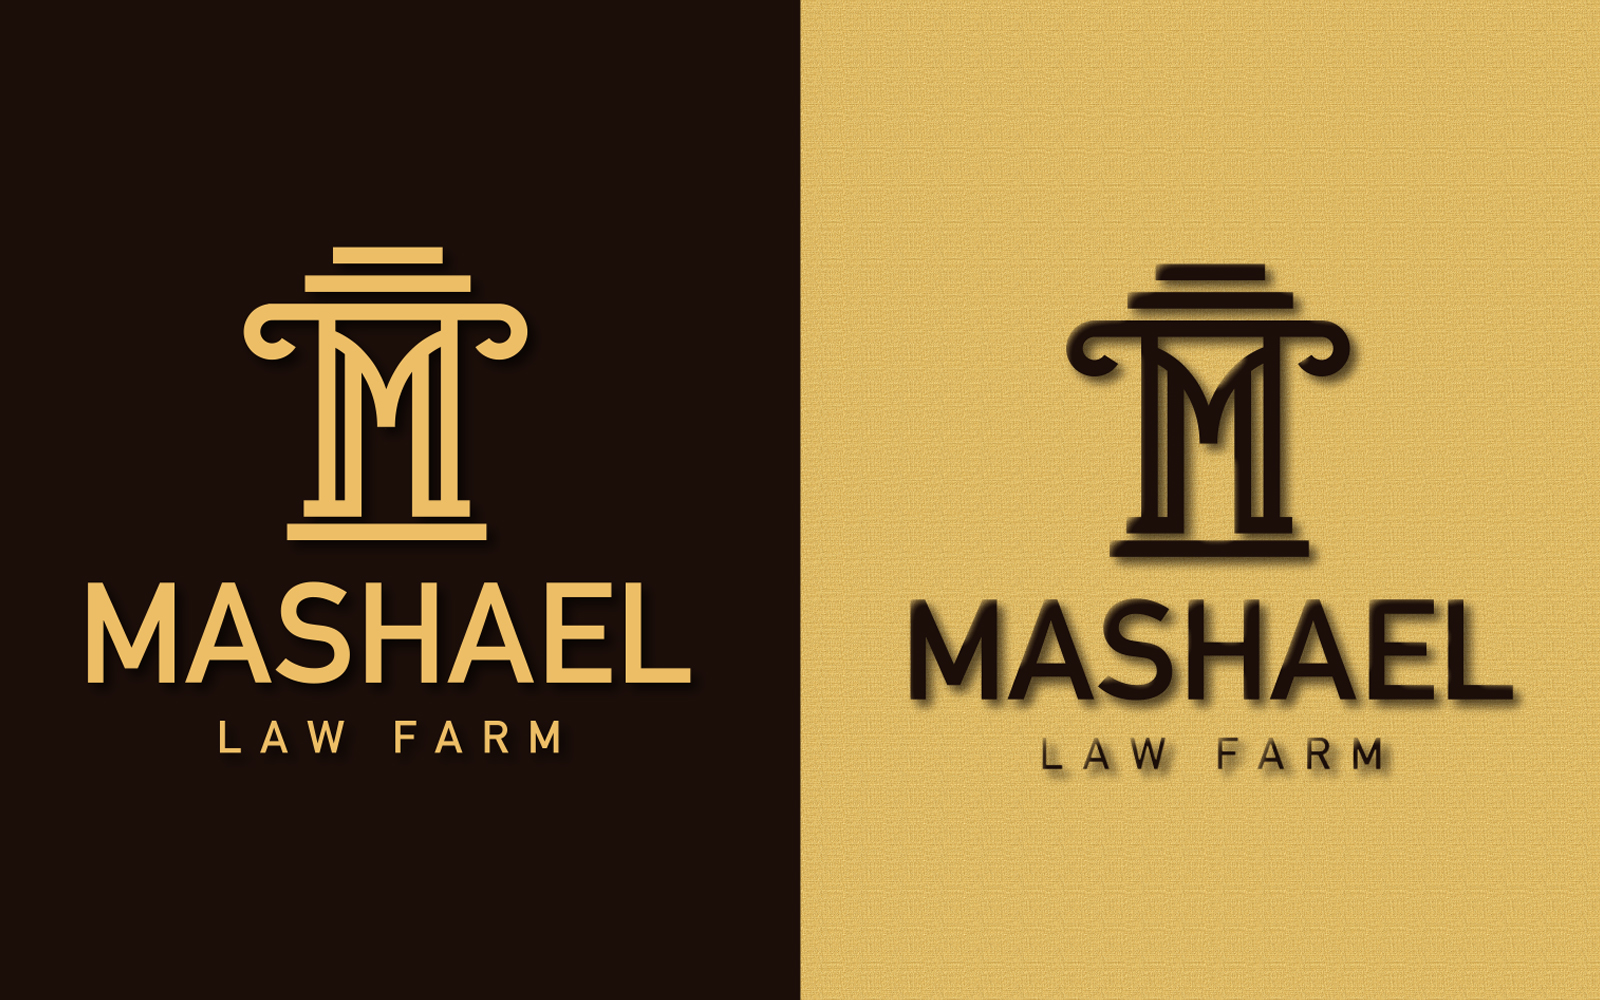 Law farm M logo- Mashael,